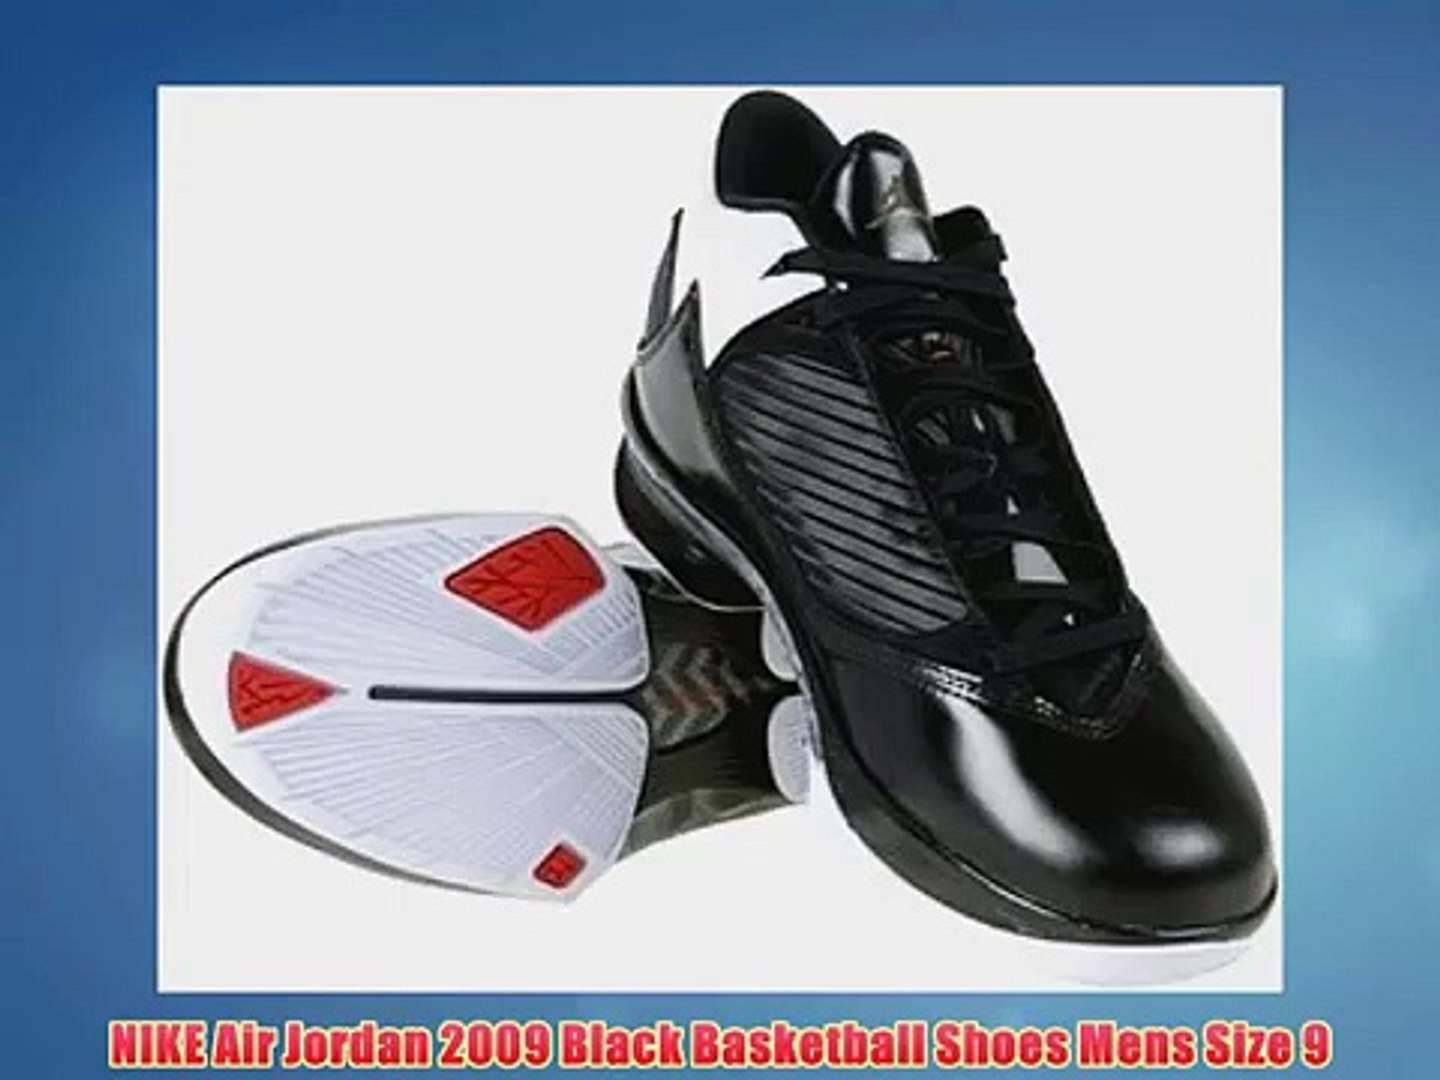 NIKE Air Jordan 2009 Black Basketball Shoes Mens Size 9 - video dailymotion